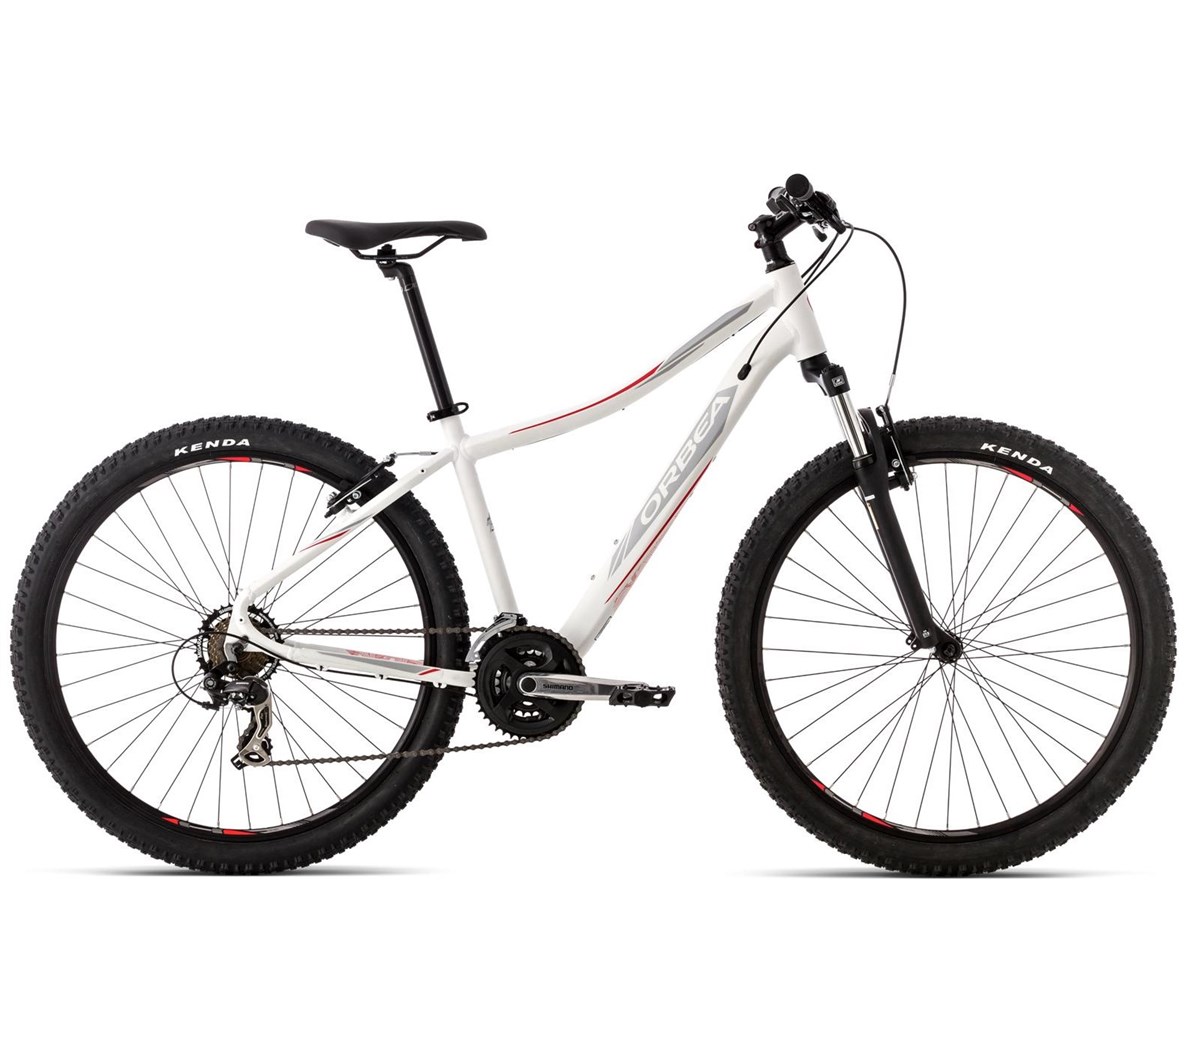 Orbea Sport 29 30 Entrance  Mountain Bike 2015 - Hardtail MTB product image